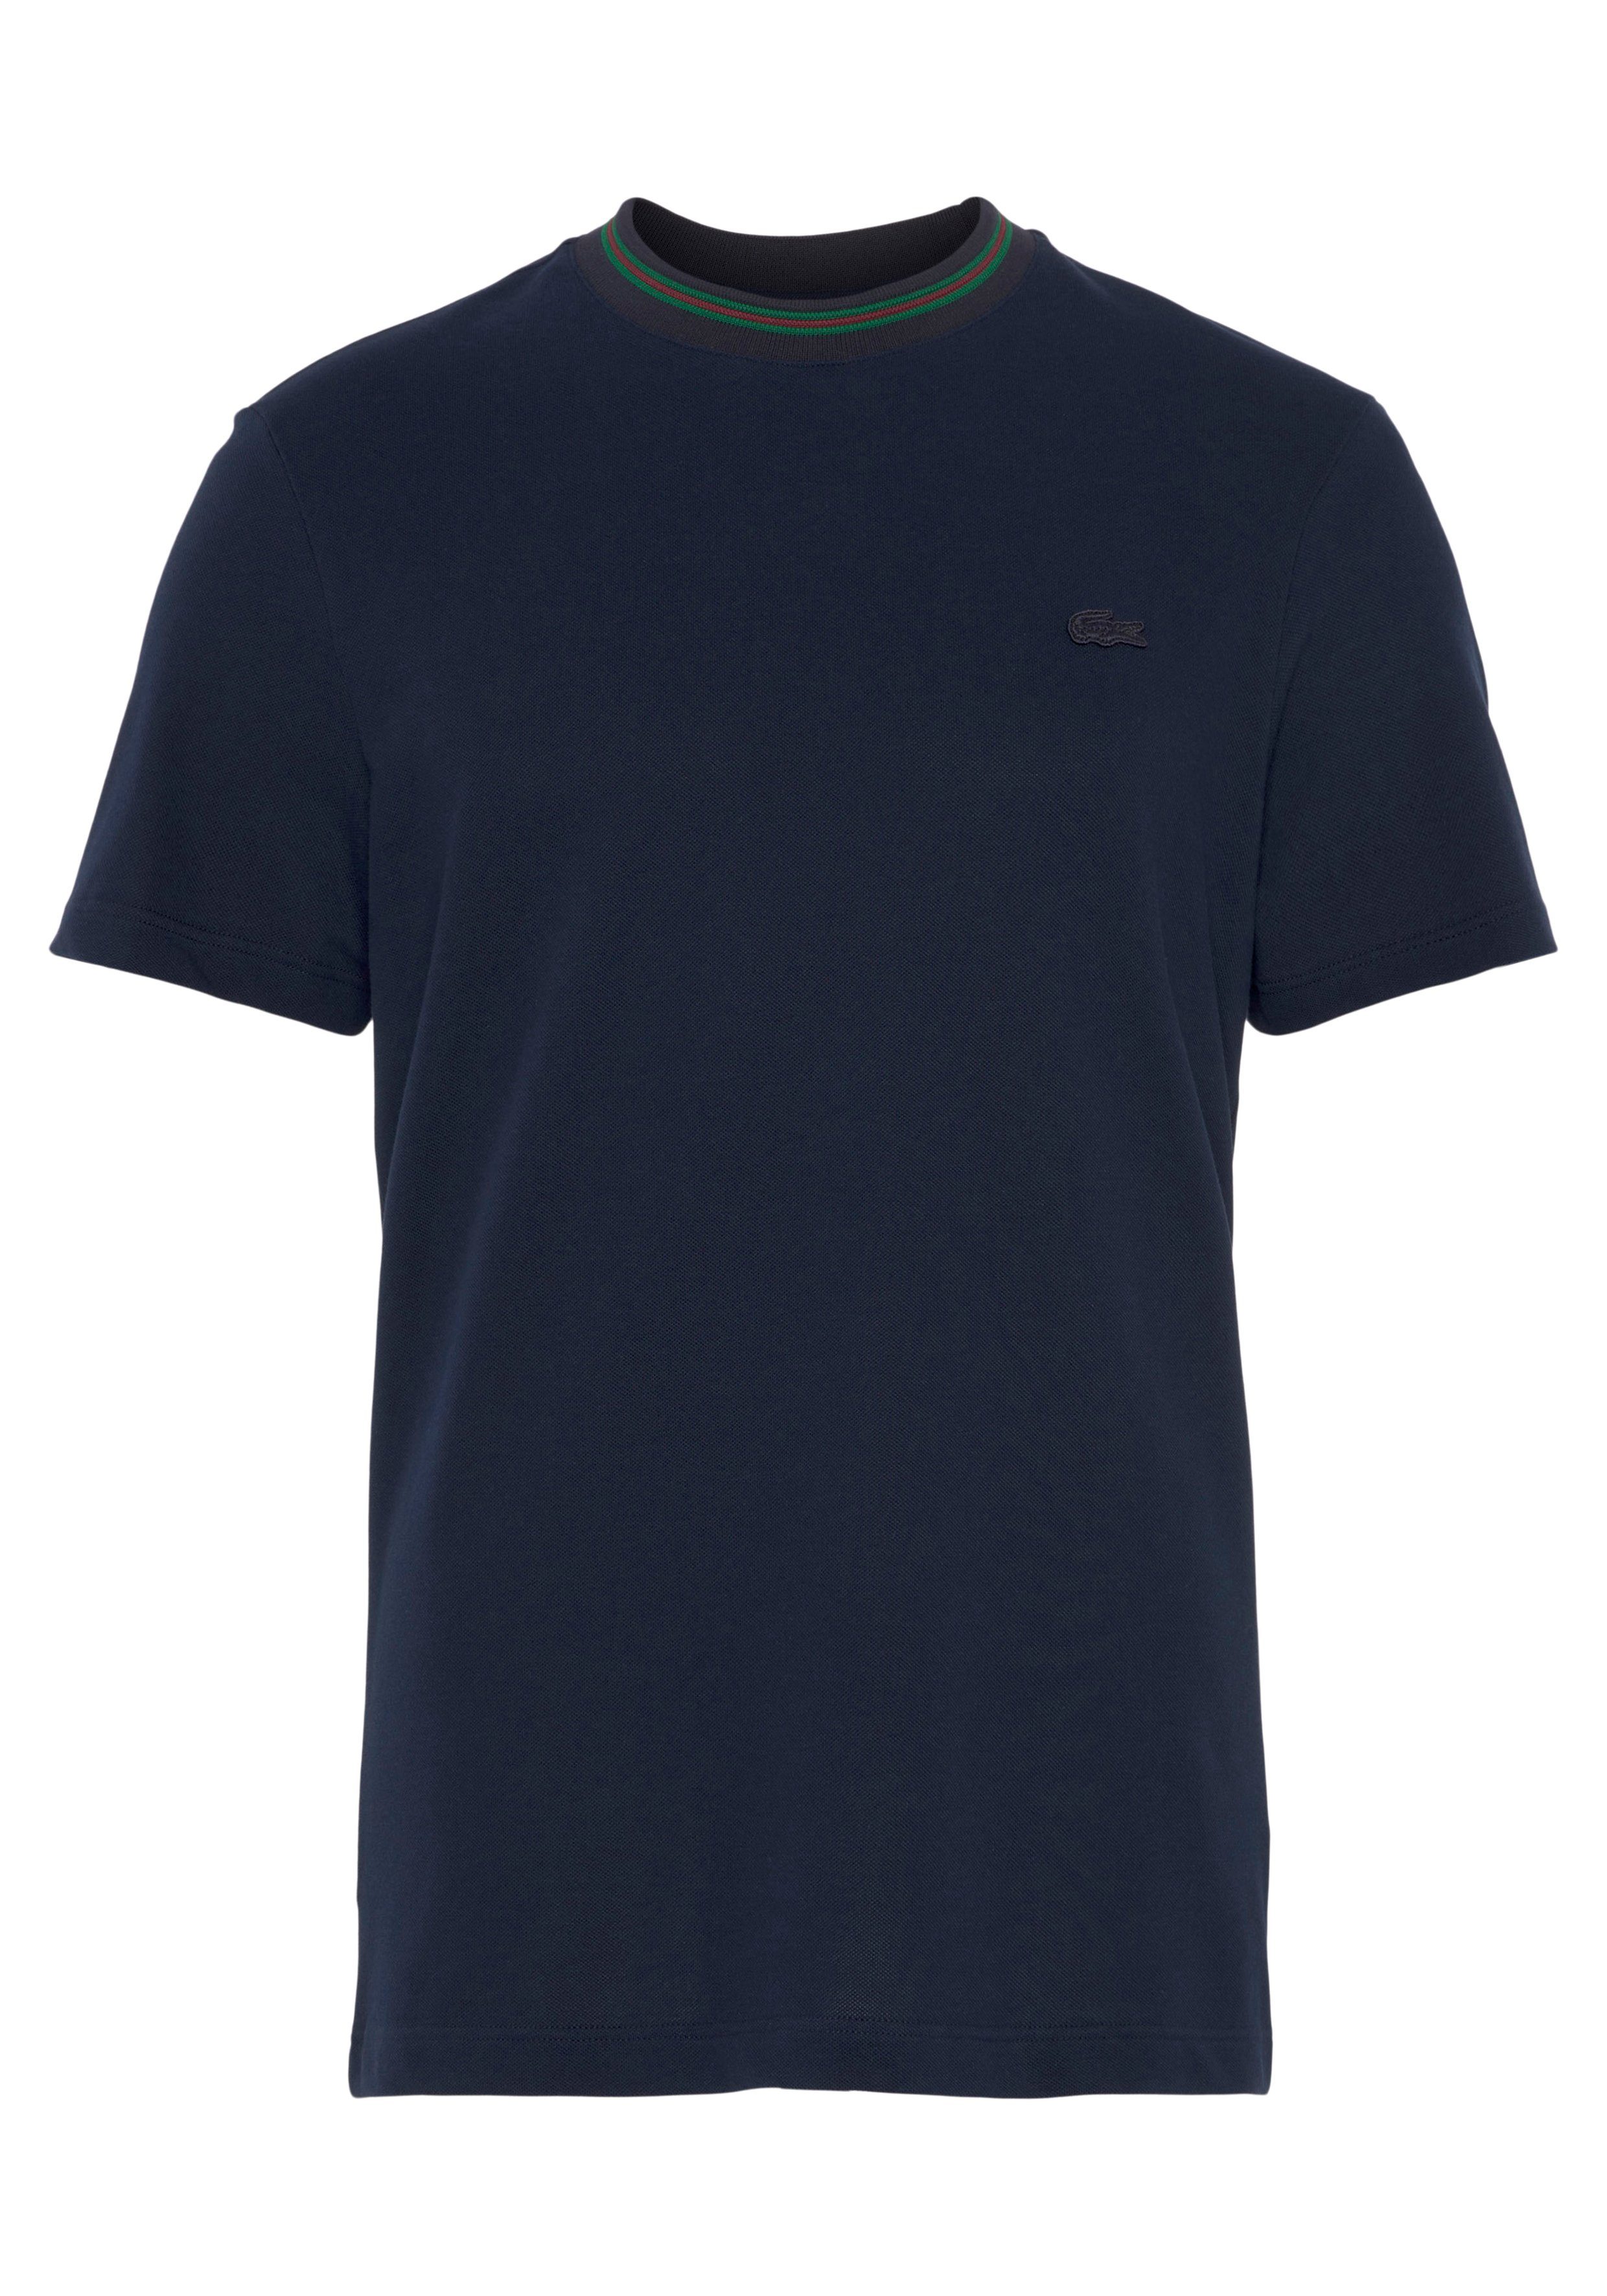 Lacoste T-Shirt T-SHIRT mit am Rundhalsausschnitt, kontrastfarbenen Mit Ausschnitt Details